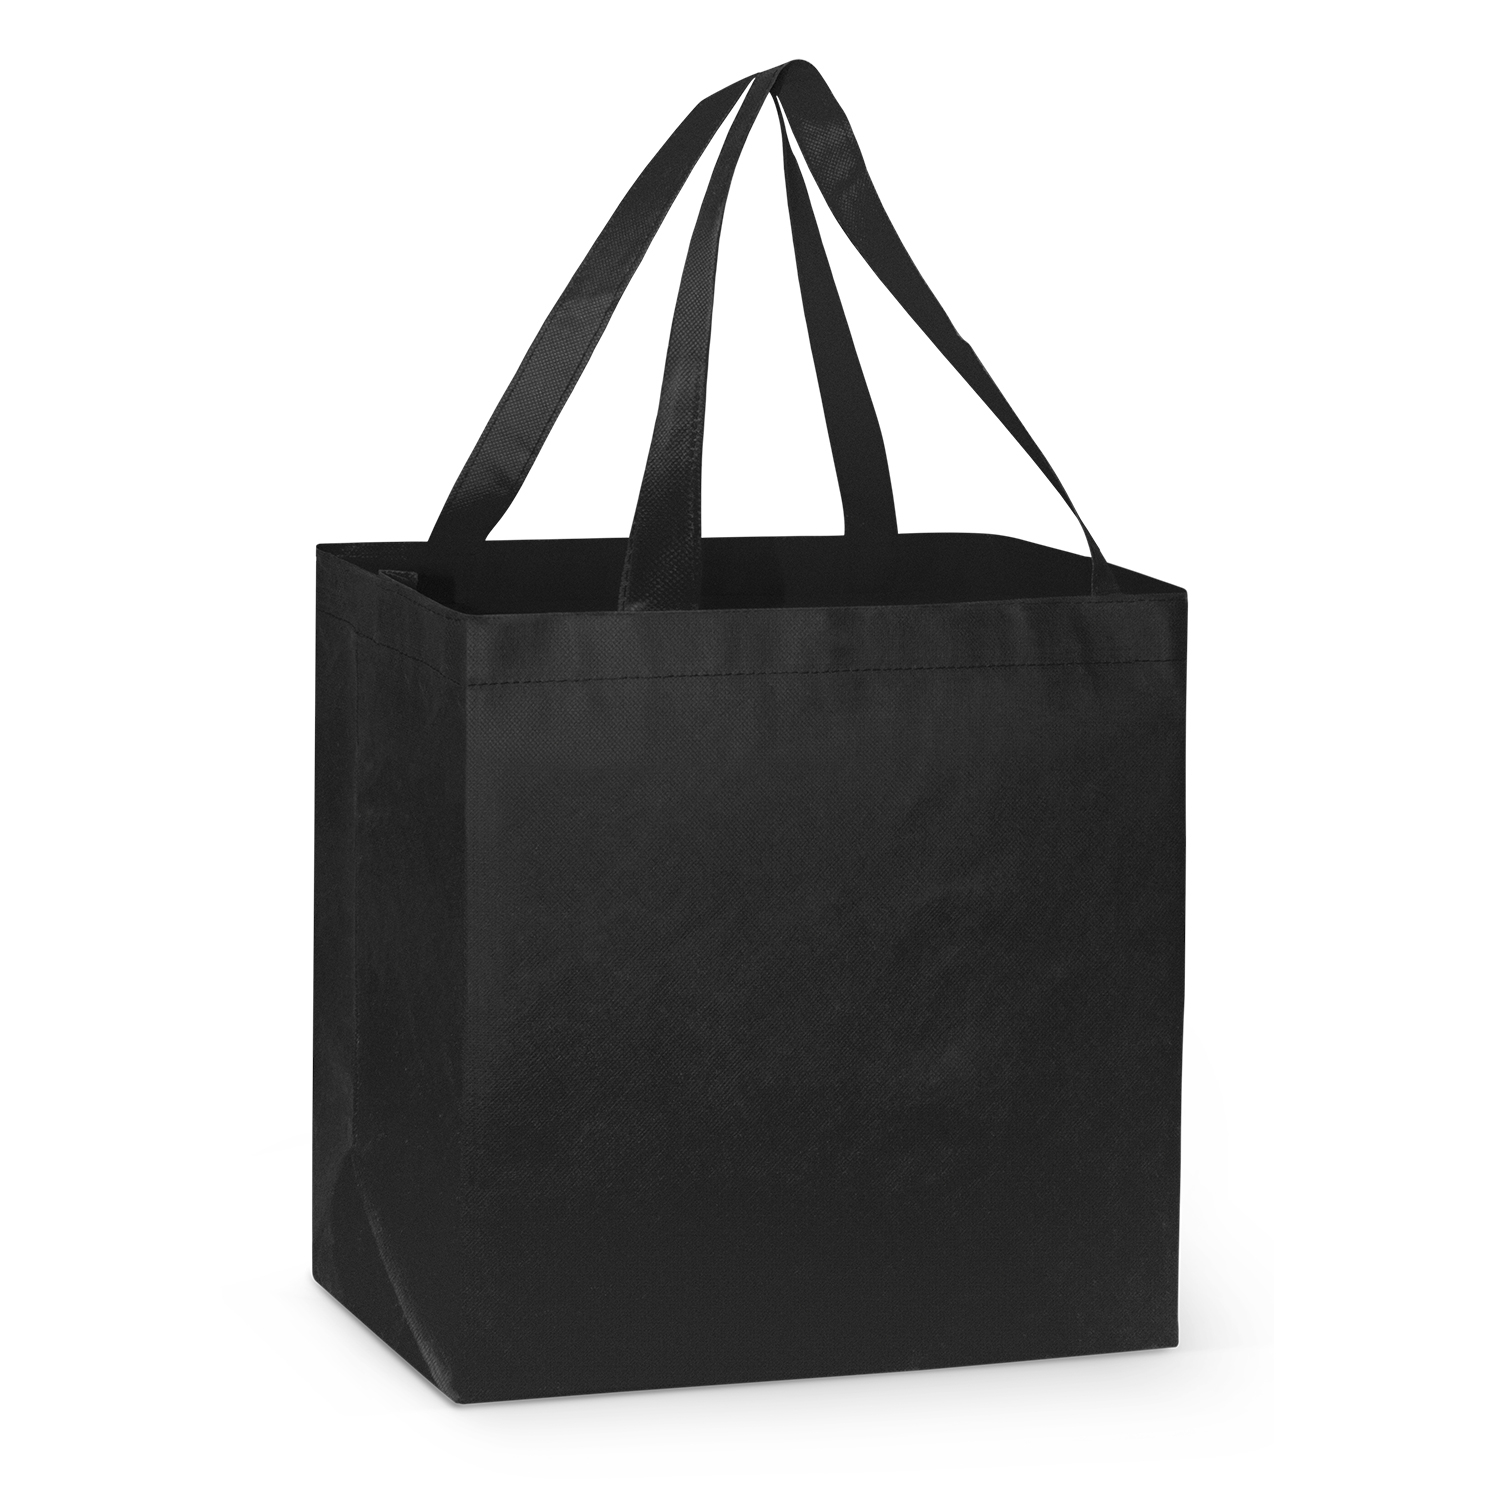 TRENDS | City Shopper Tote Bag